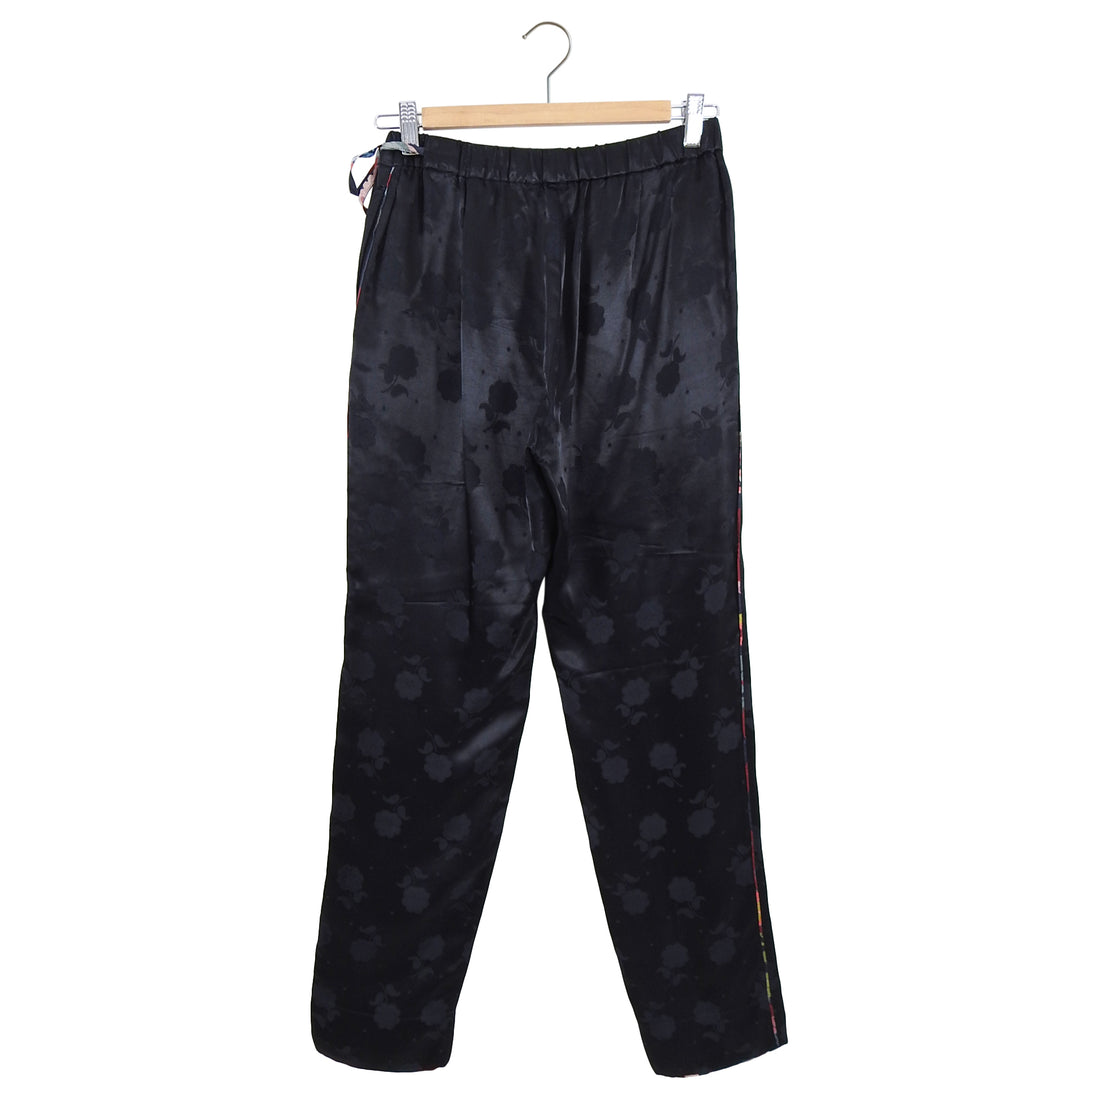 Dries van Noten Black Jacquard Satin Pajama Pant - FR36 / 2/4